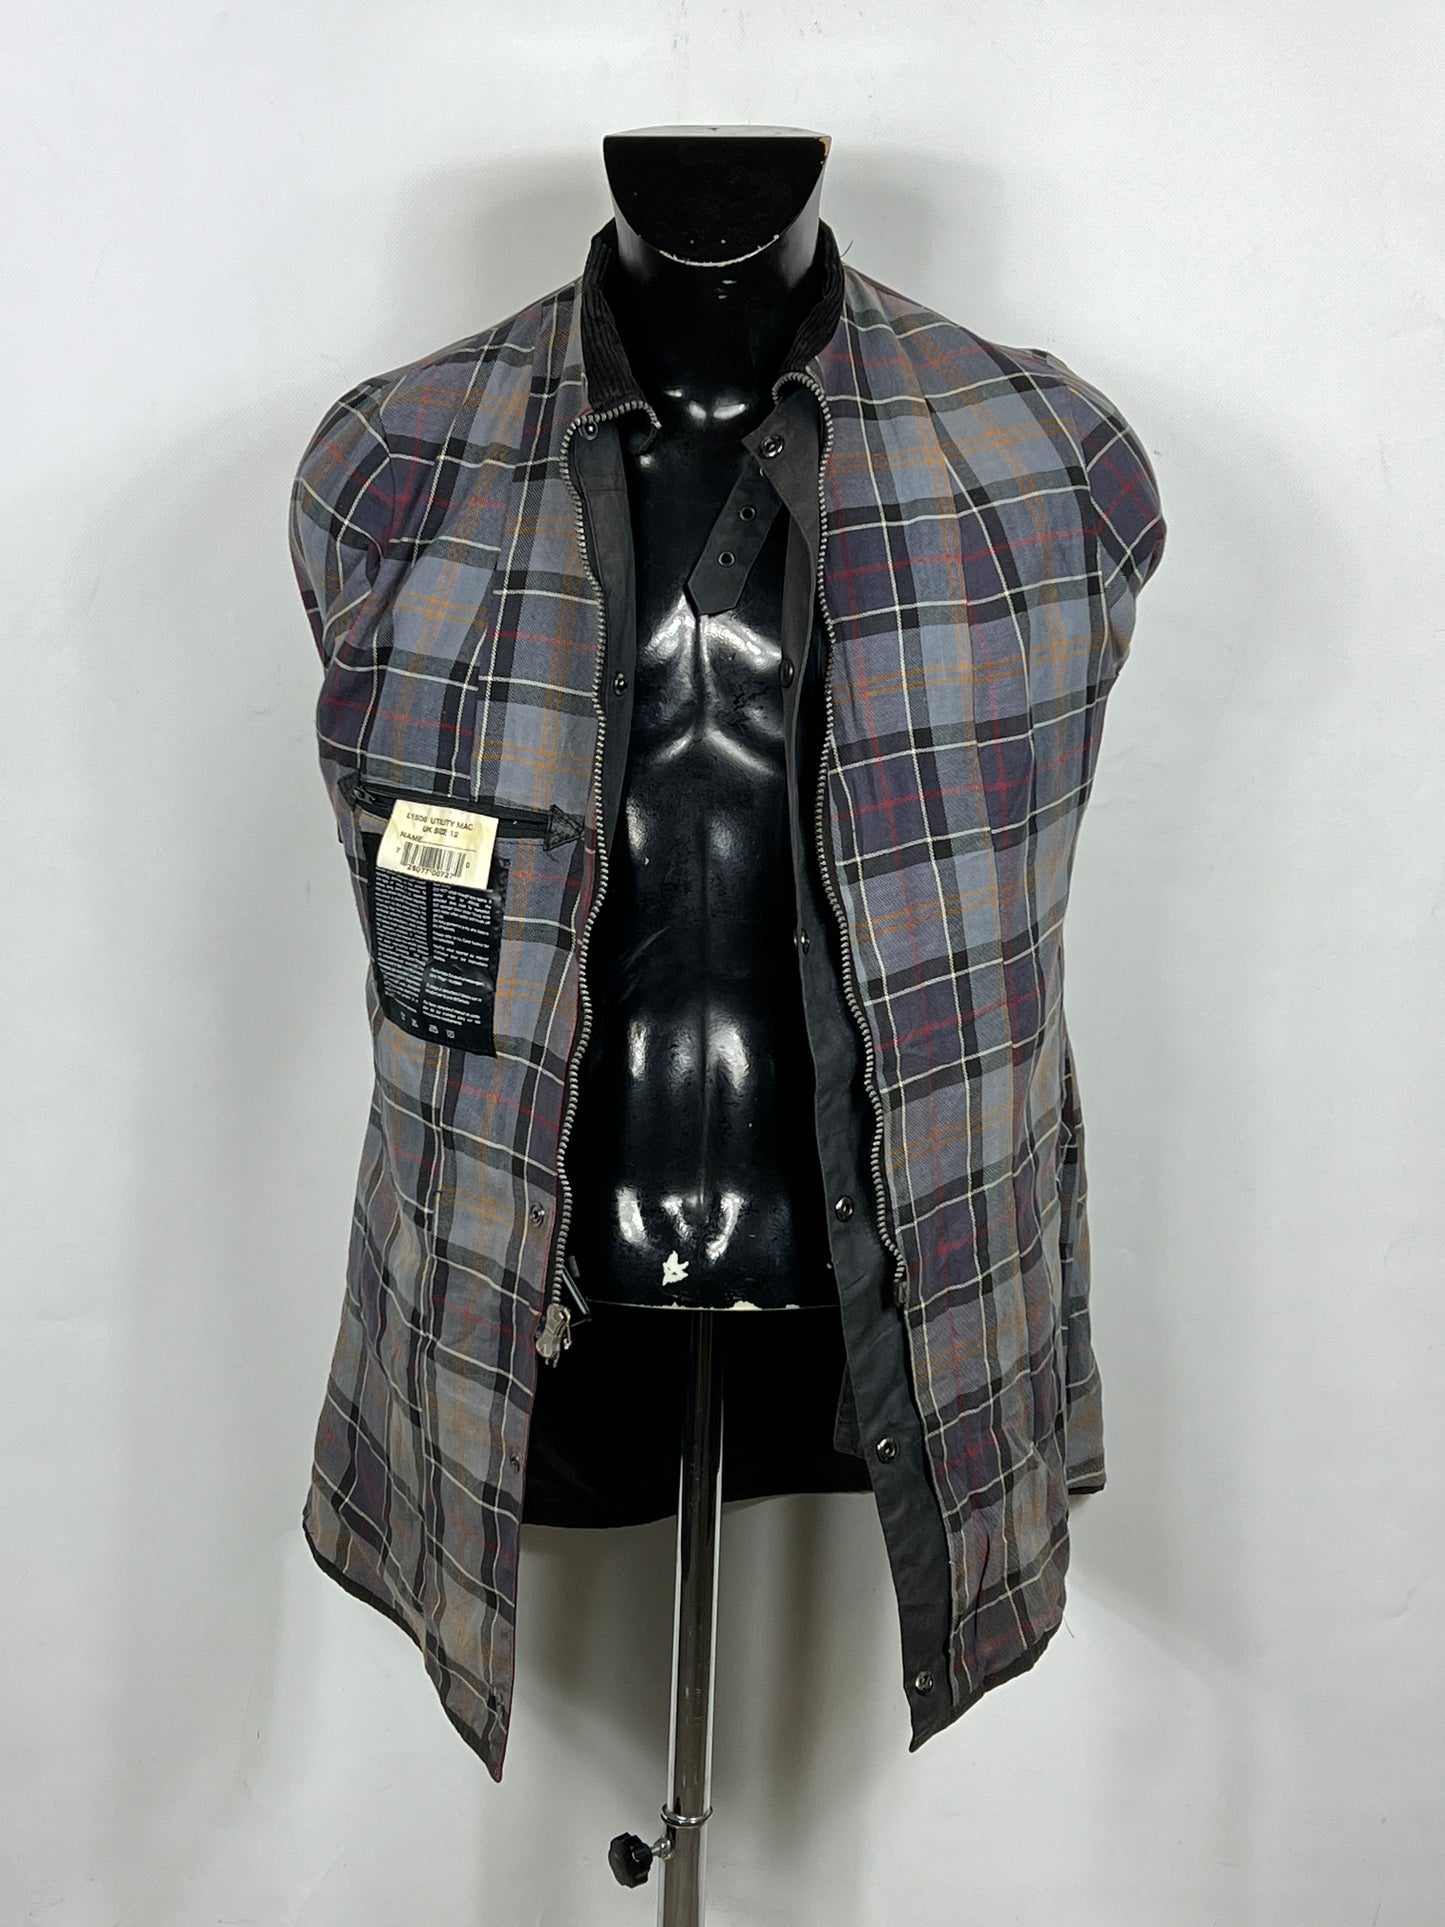 Giacca Barbour Donna con cintura nera utility mac UK12 -Lady Black jacket size UK12